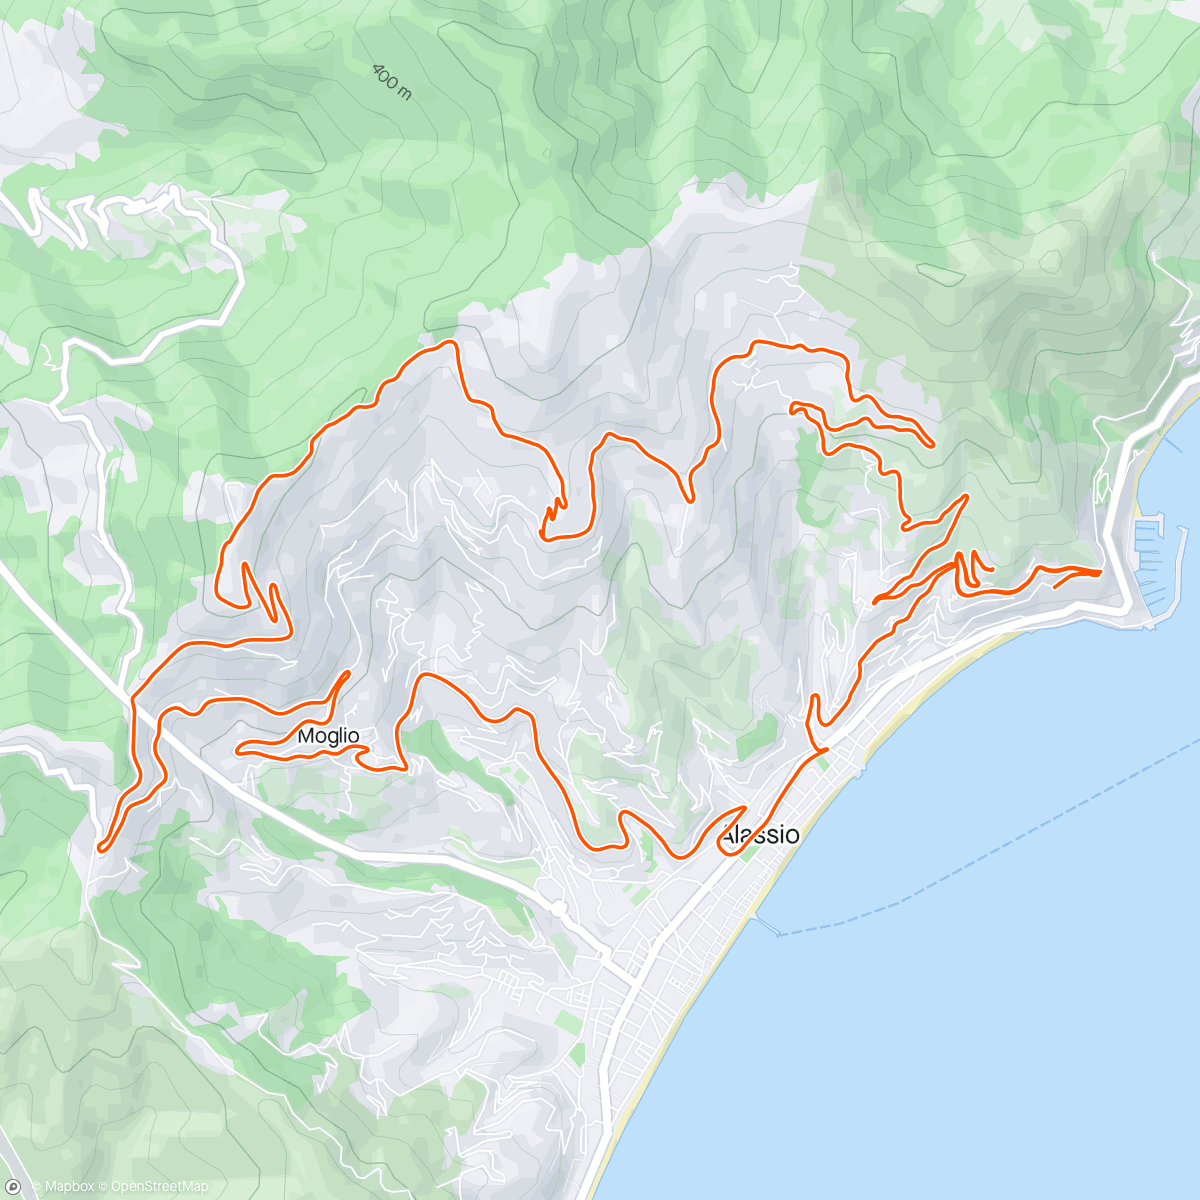 Map of the activity, Giro Alassio